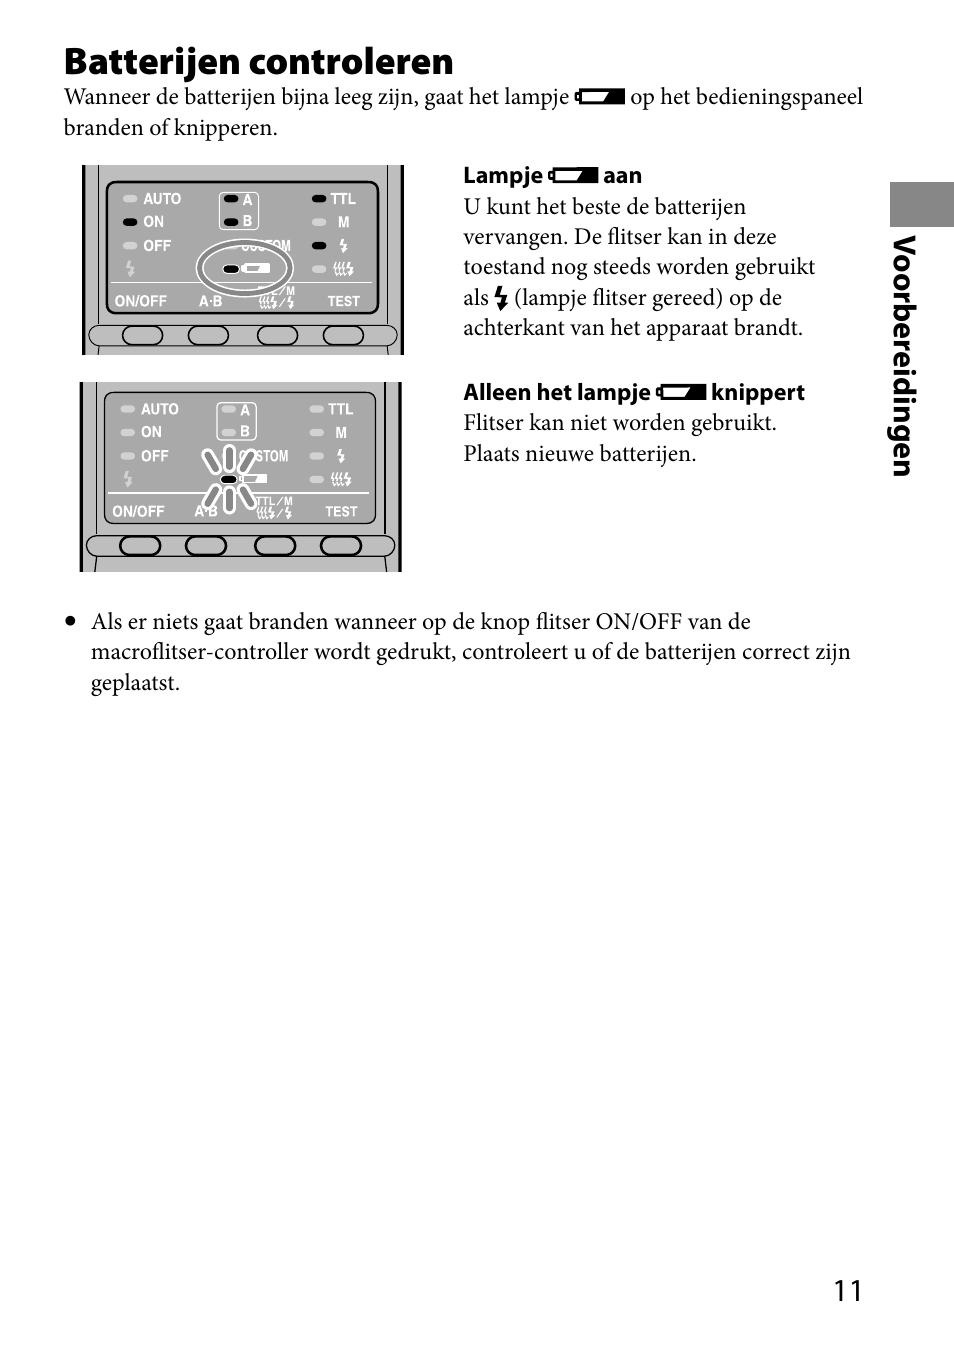 Batterijen controleren, 11 vo or ber eidingen | Sony HVL-MT24AM User Manual | Page 245 / 293